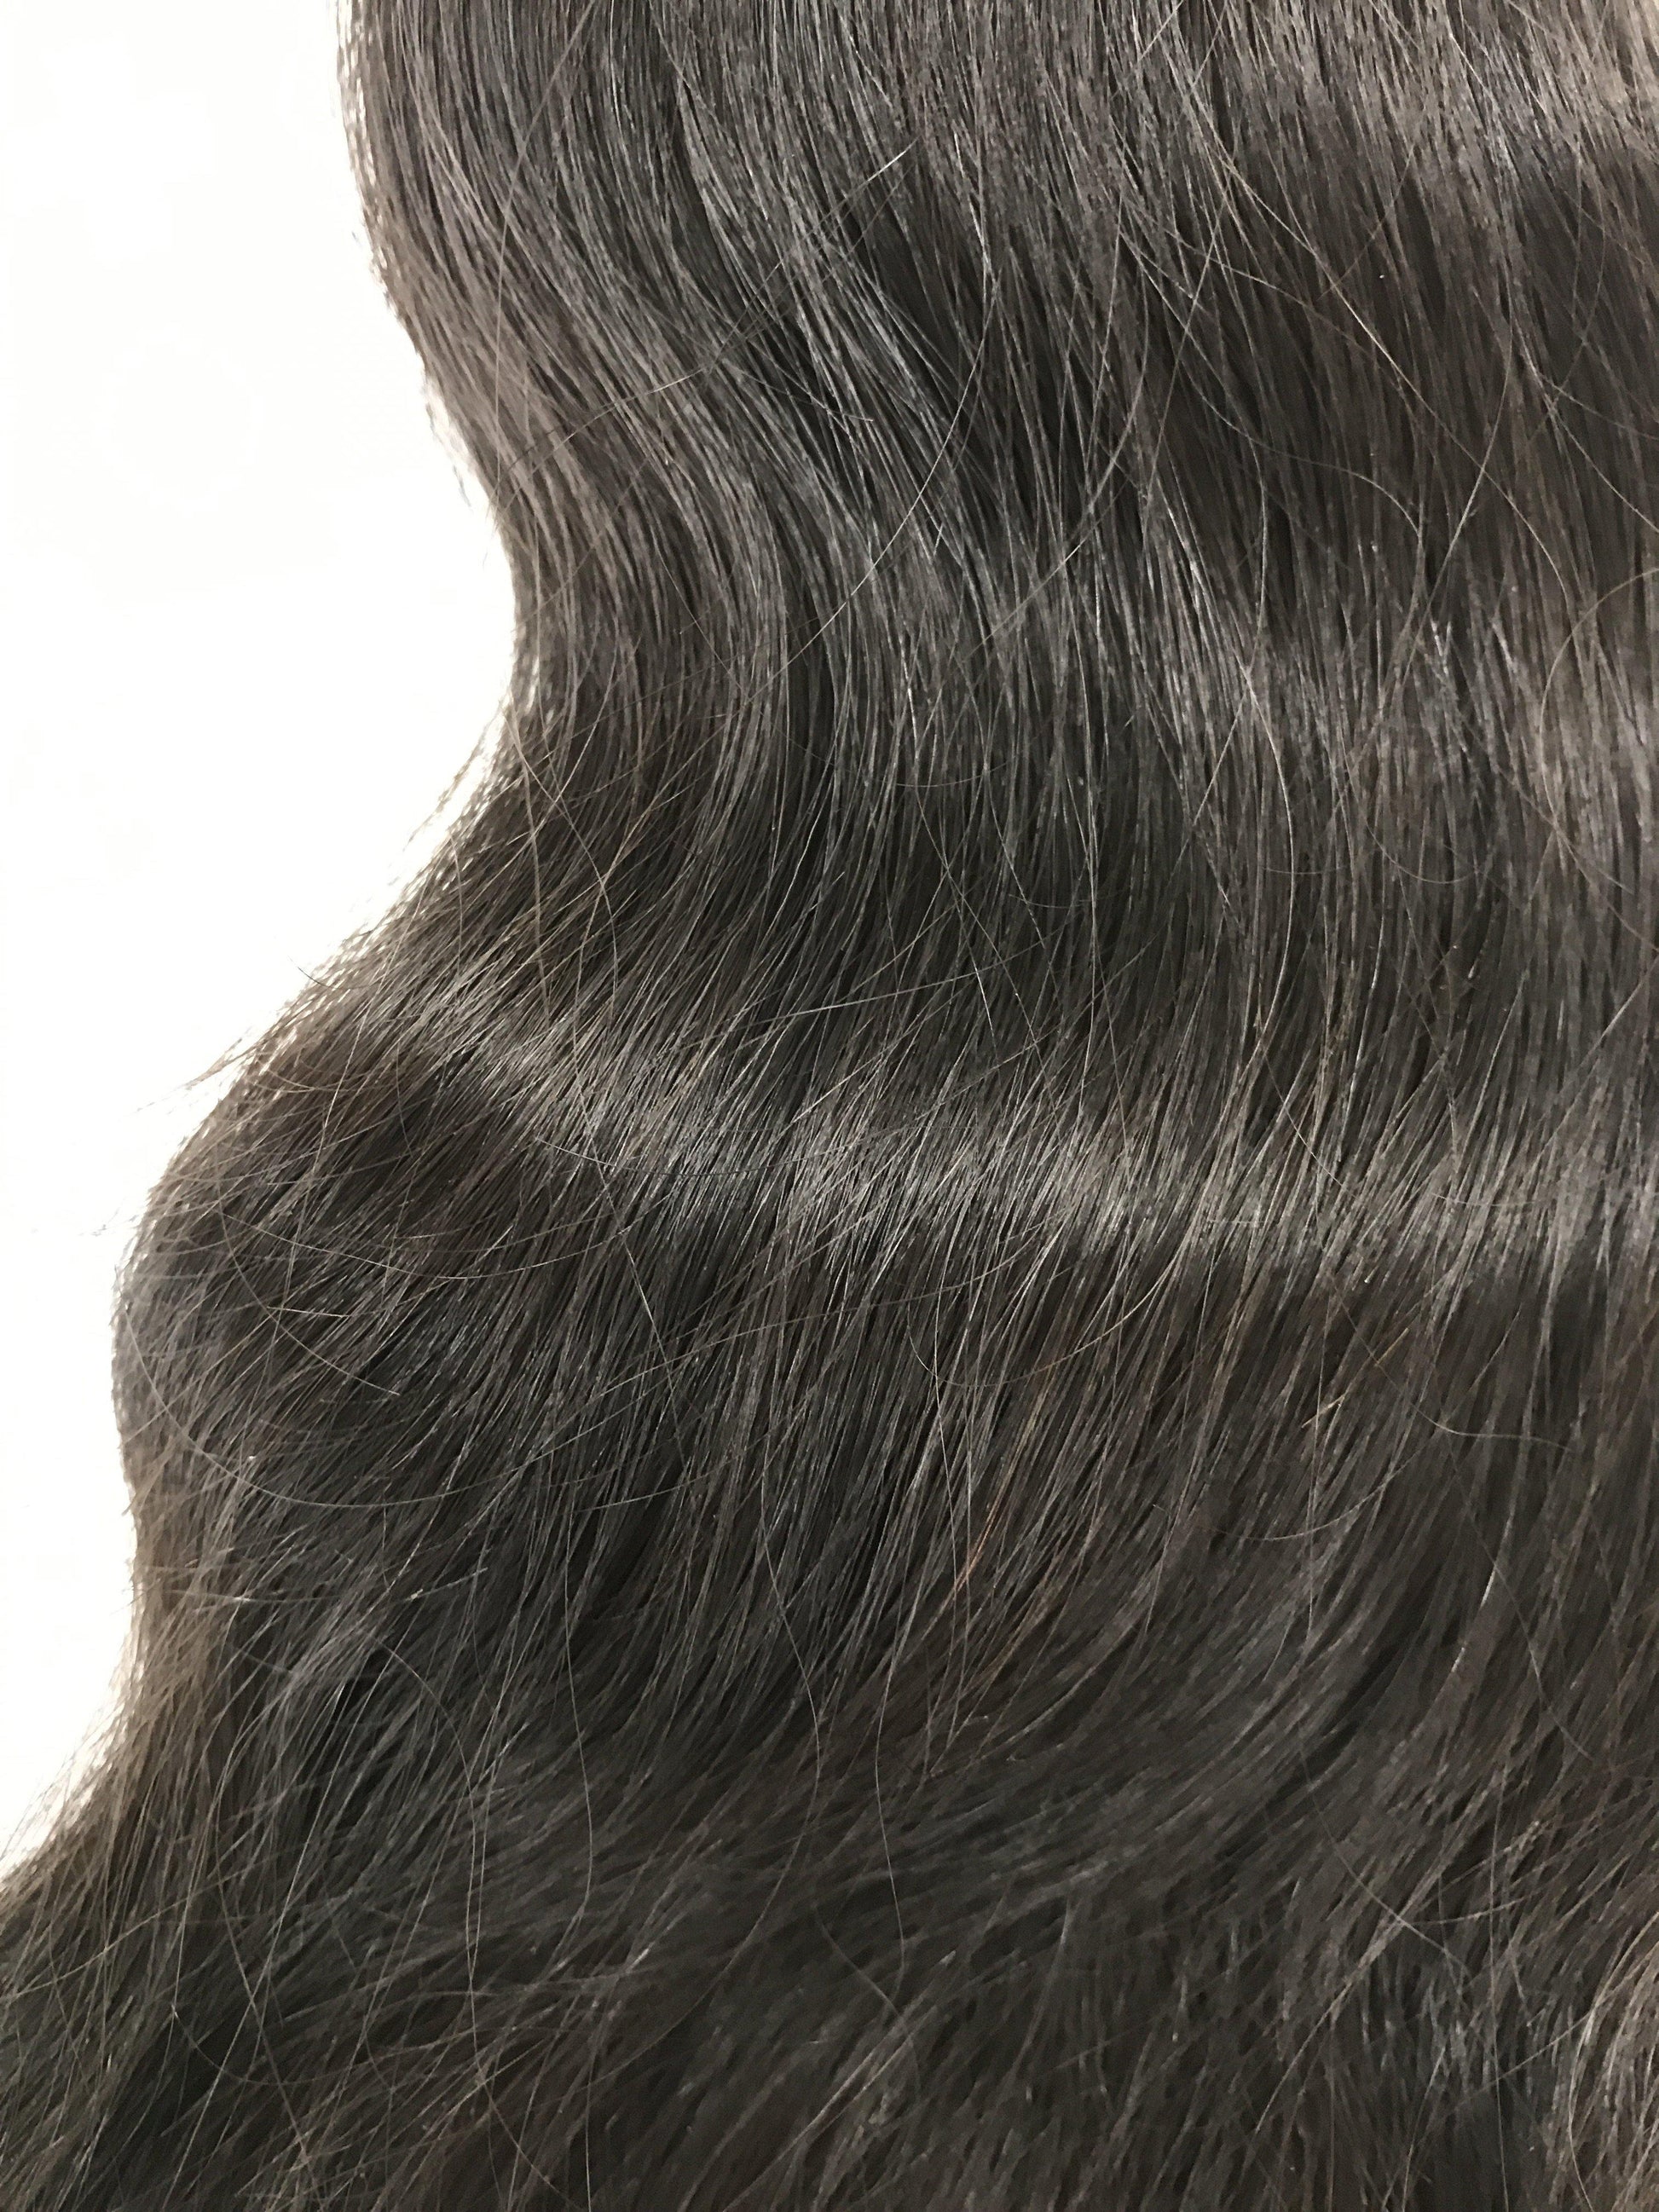 Indian Virgin Remy Human Hair, Bulk, Wavy, 18'', Virgin, Quick Shipping!-Virgin Hair & Beauty, The Best Hair Extensions, Real Virgin Human Hair.